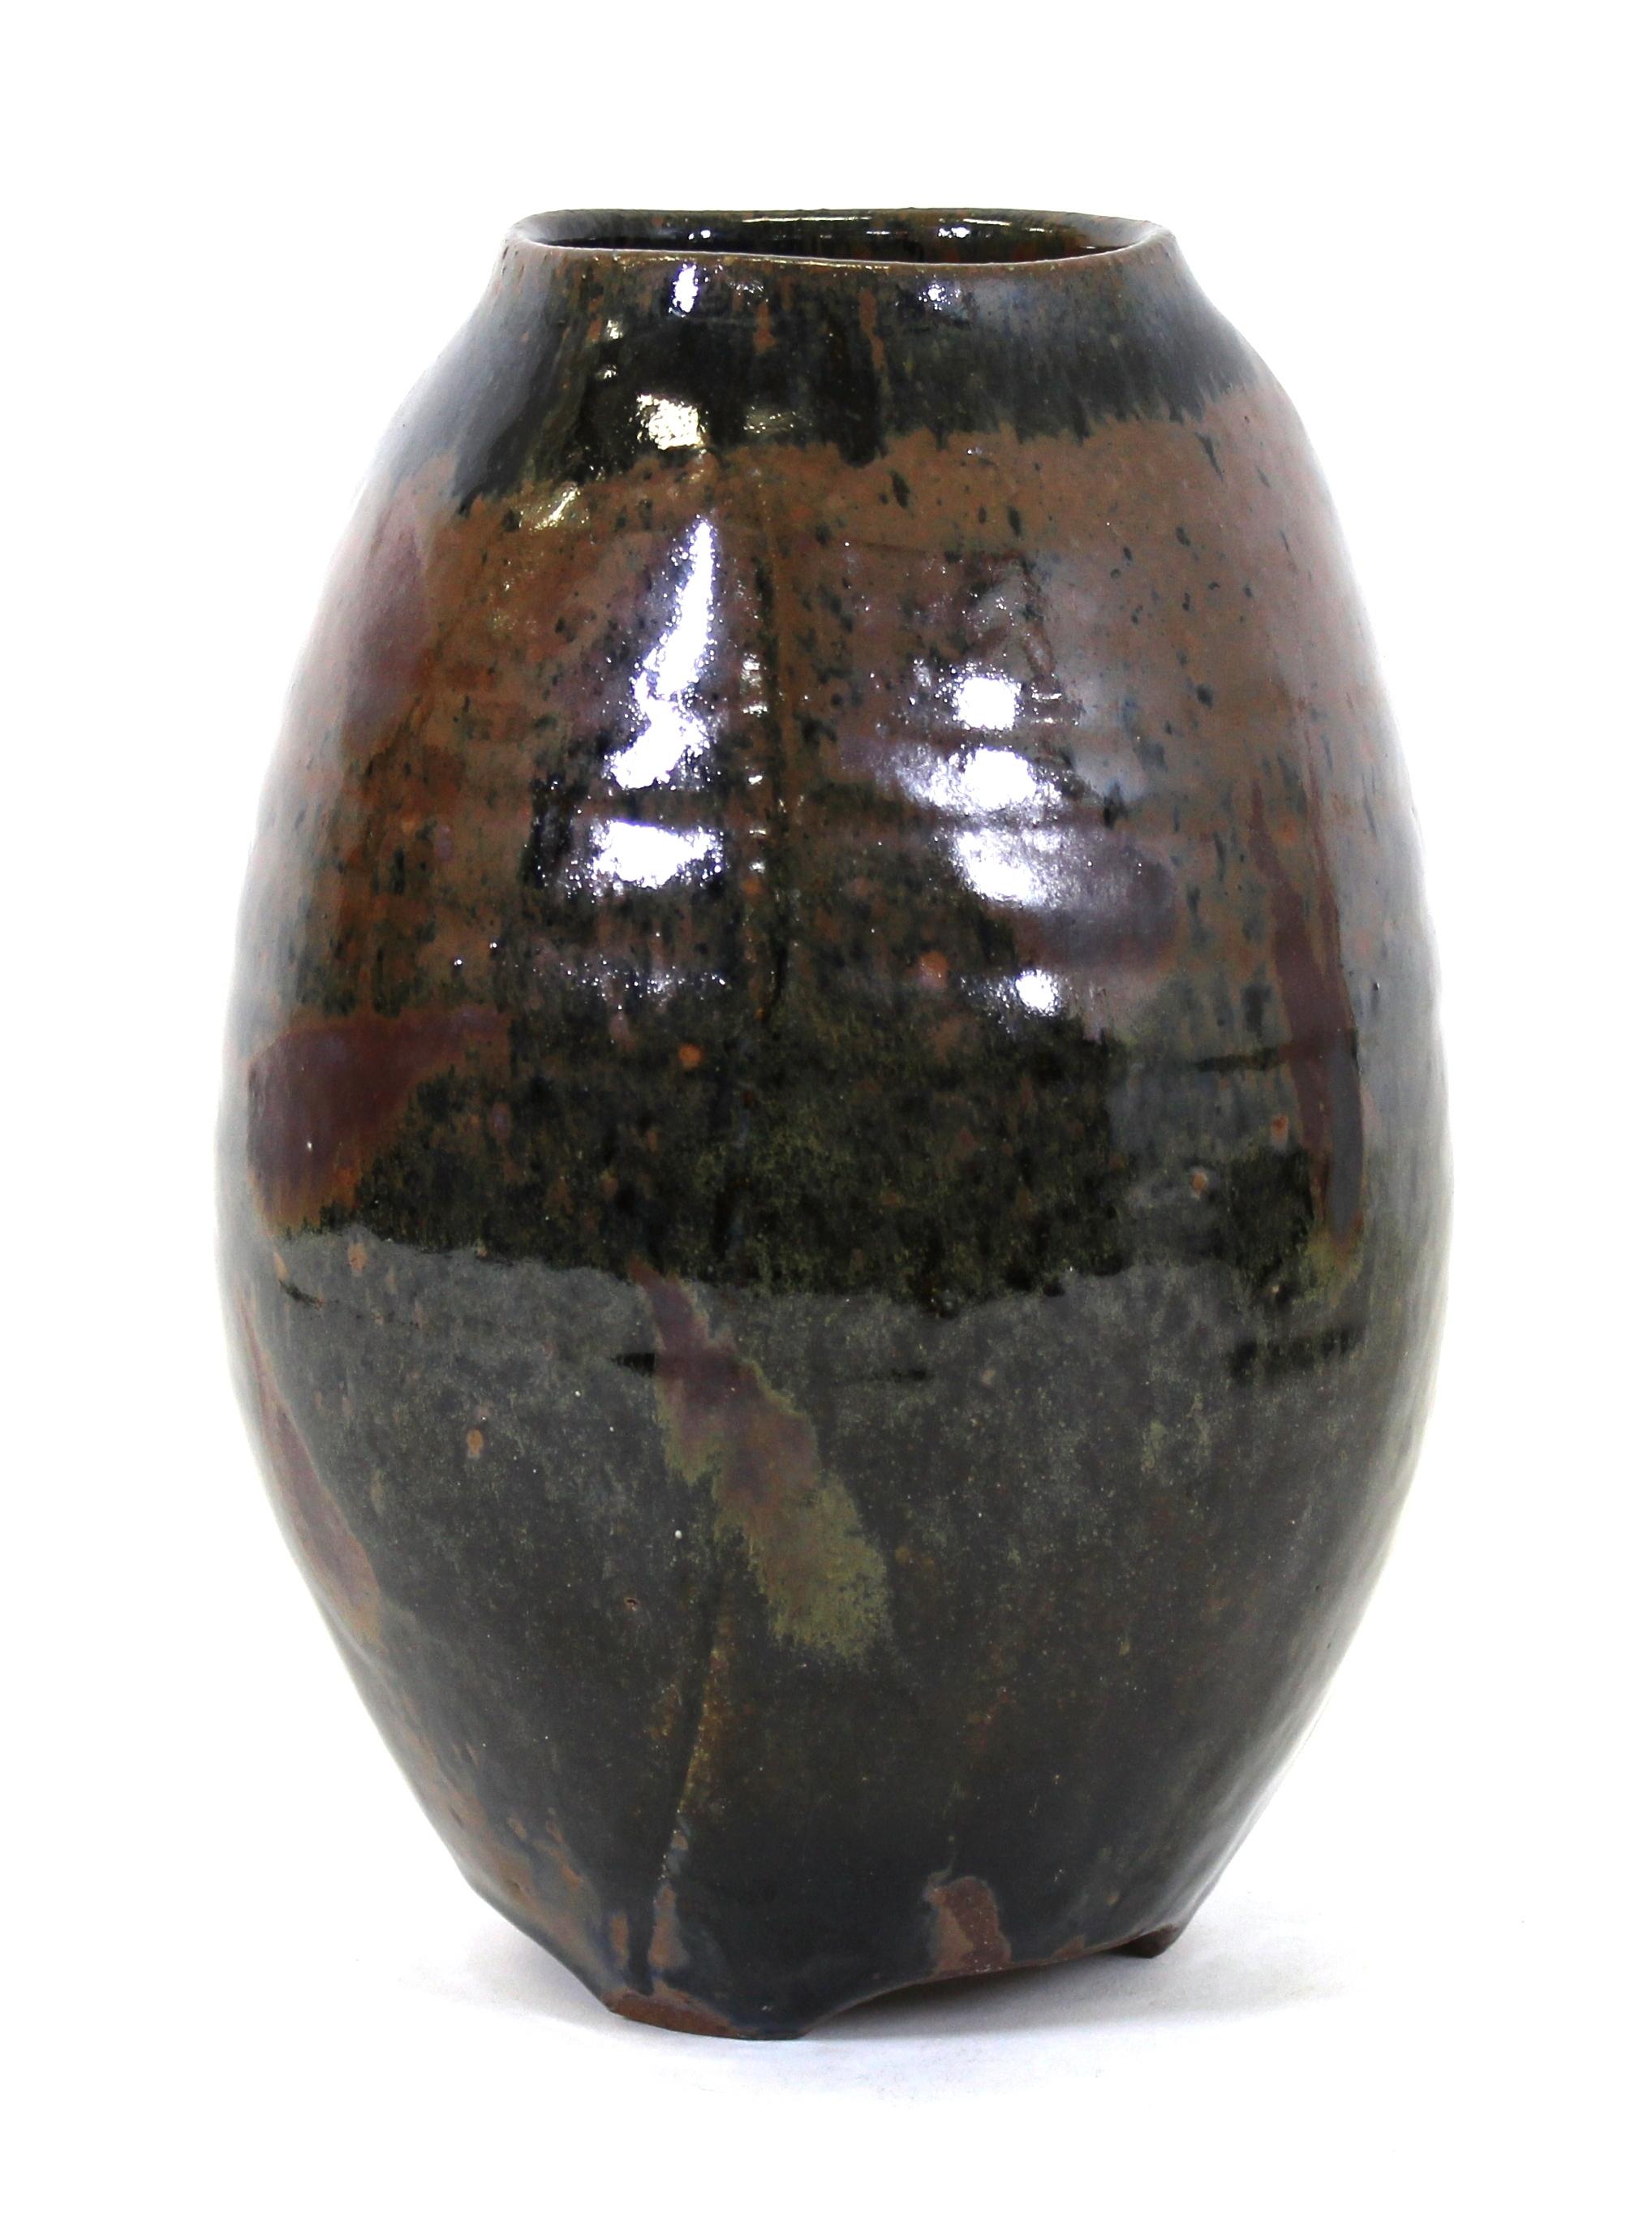 Japanese Mid-Century Modern art studio pottery vase with luster glaze on diminutive tripod legs.